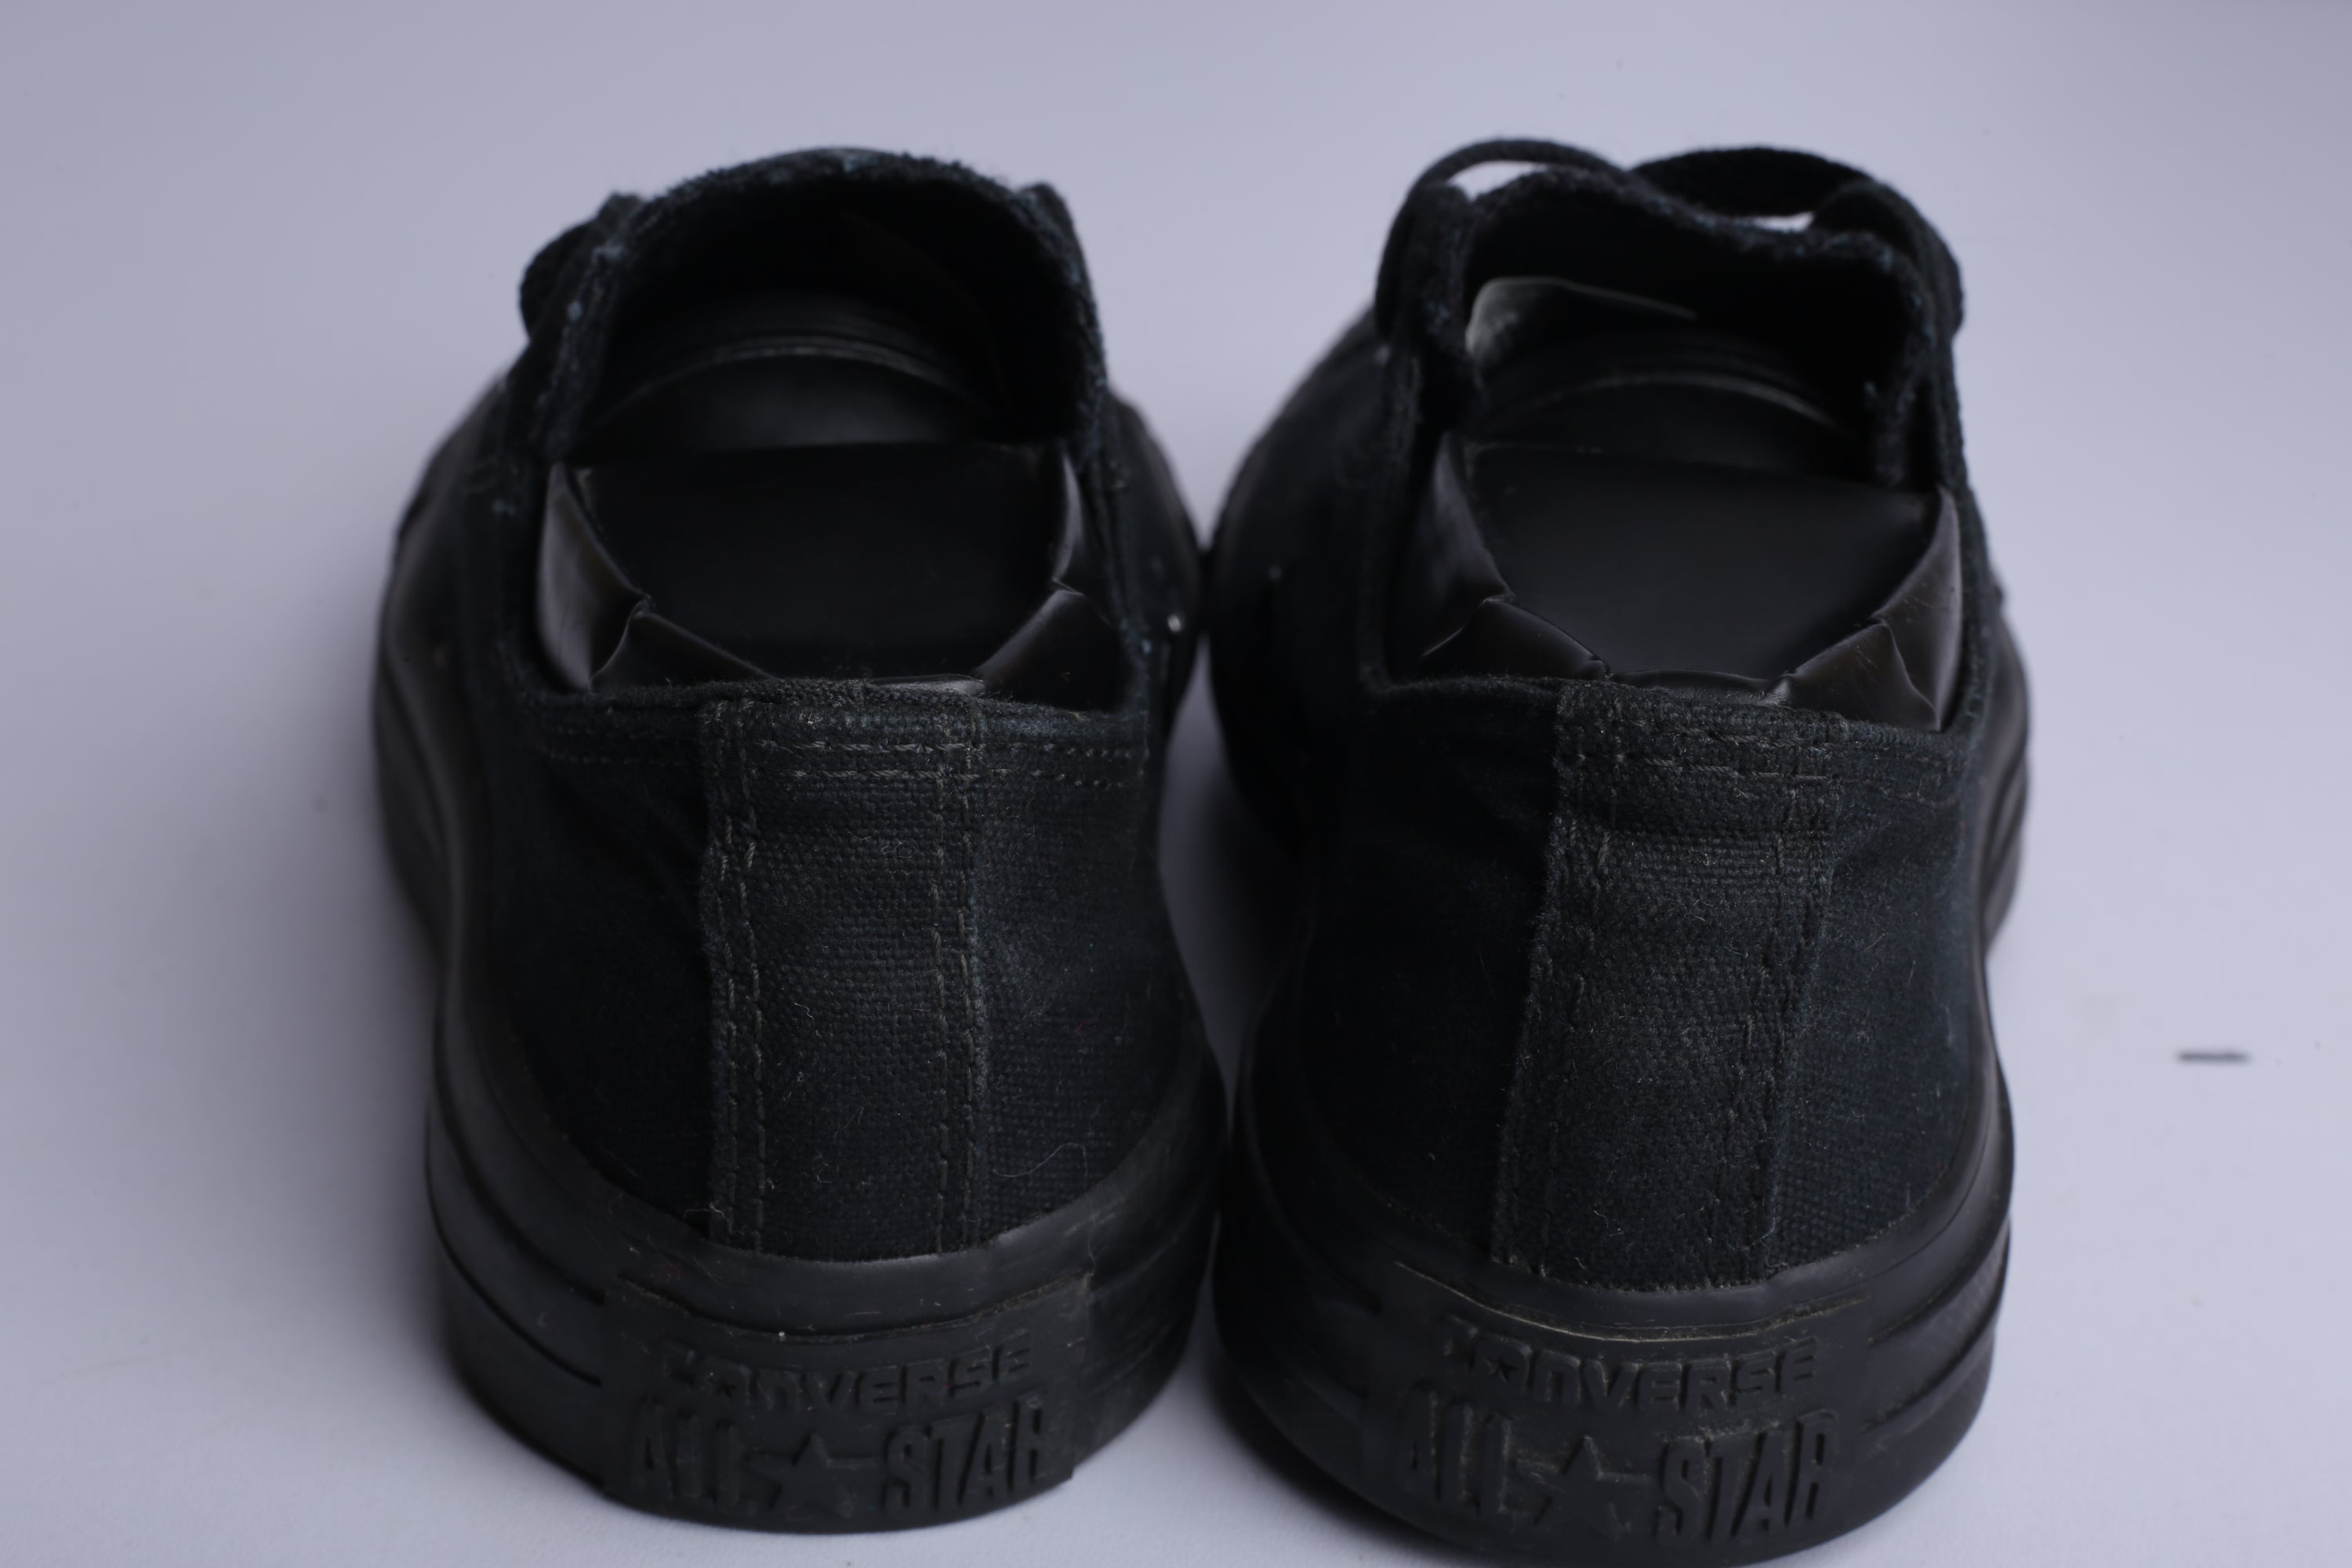 Chuck Taylor All Star Low Black Sneaker - (Condition Premium)